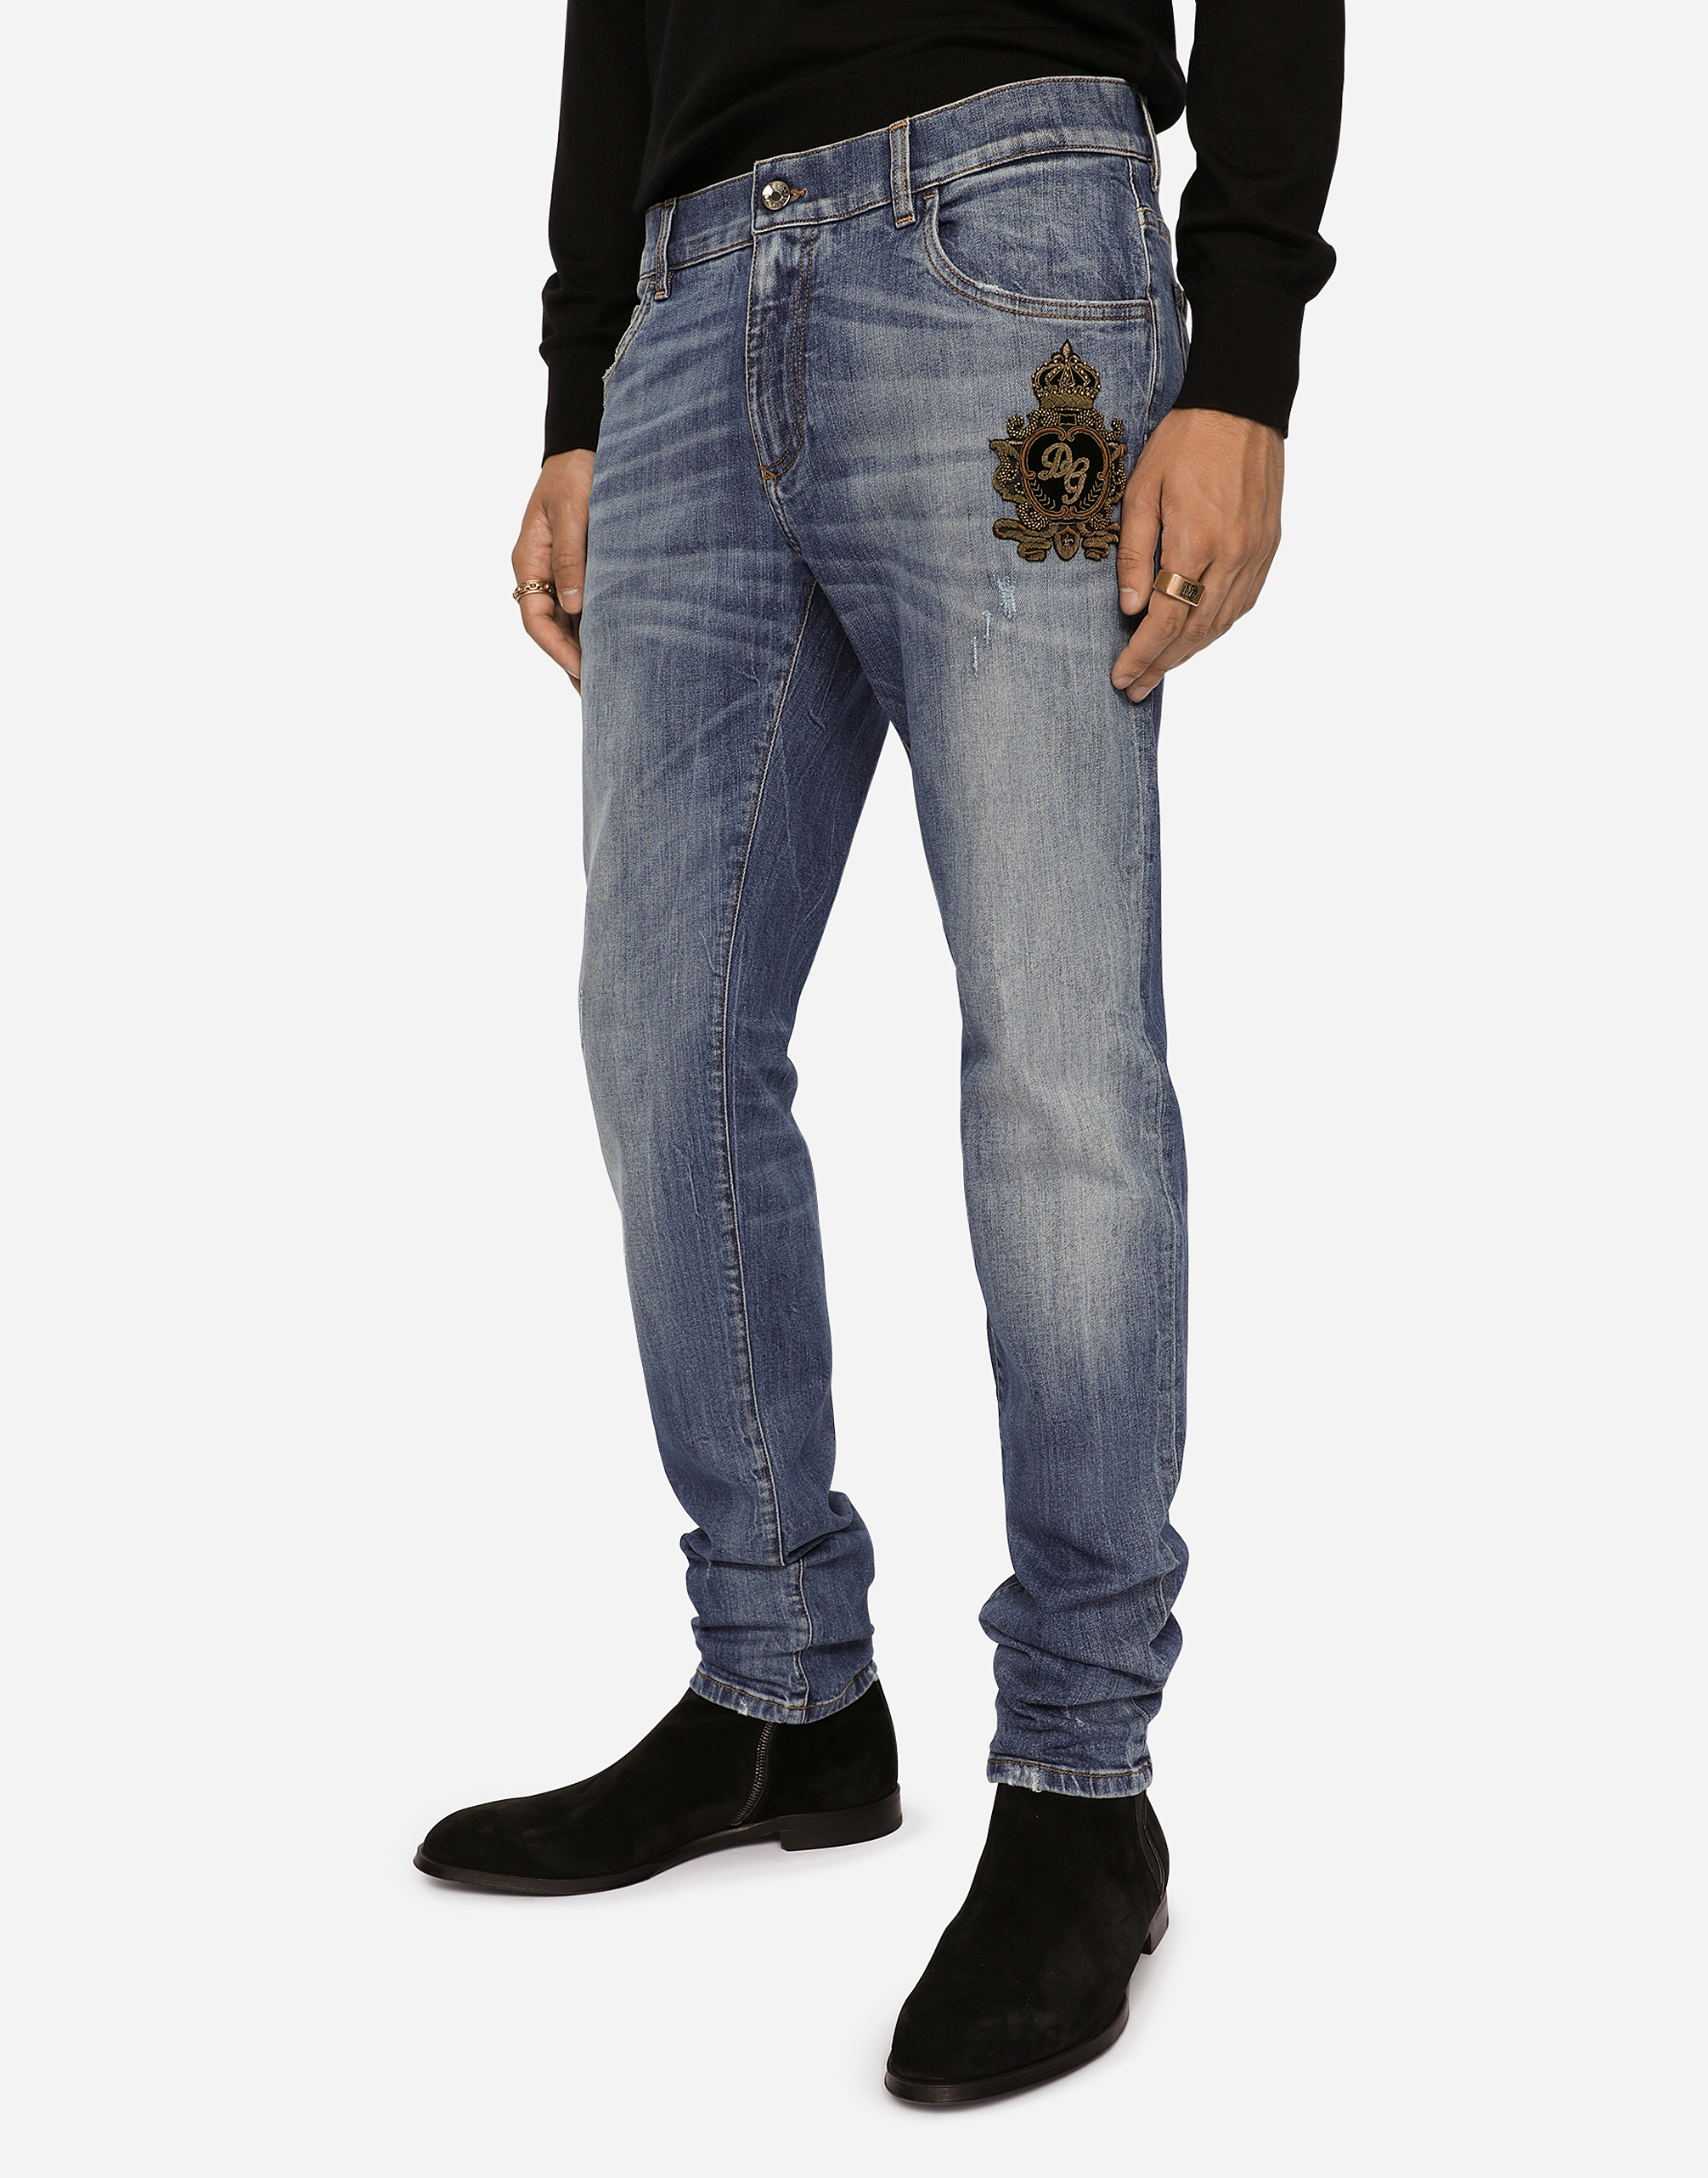 Jeans skinny stretch con patchDolce & Gabbana in Denim da Uomo colore Blu Uomo Abbigliamento da Jeans da Jeans skinny 